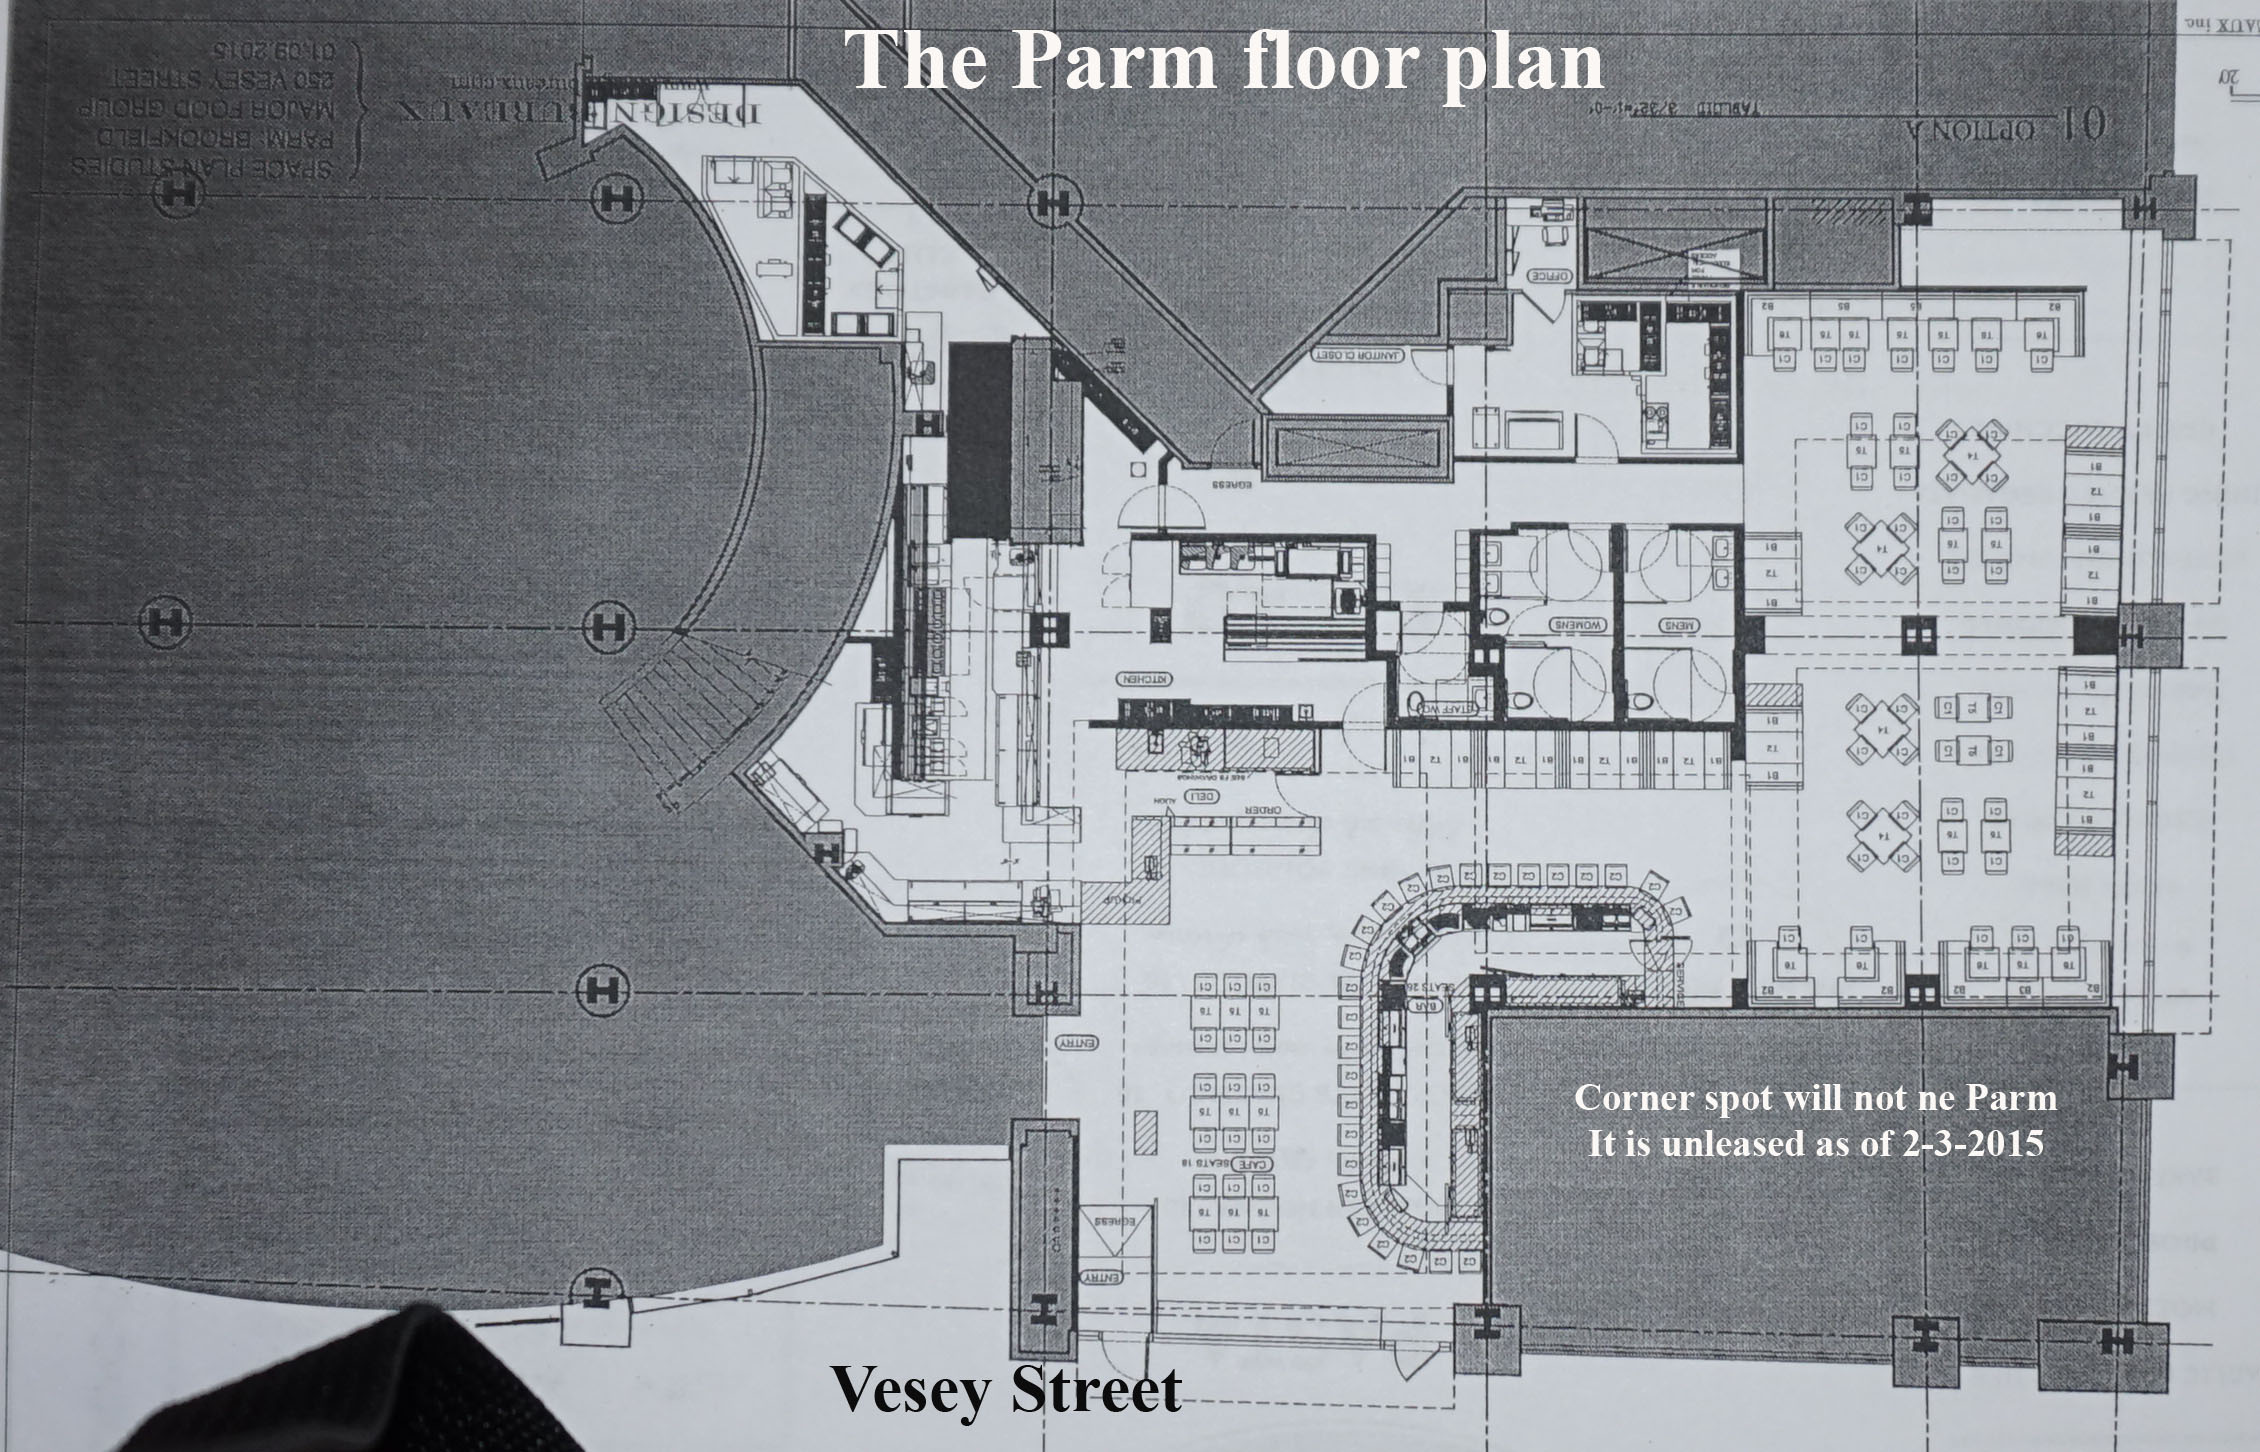 Parm floor plan